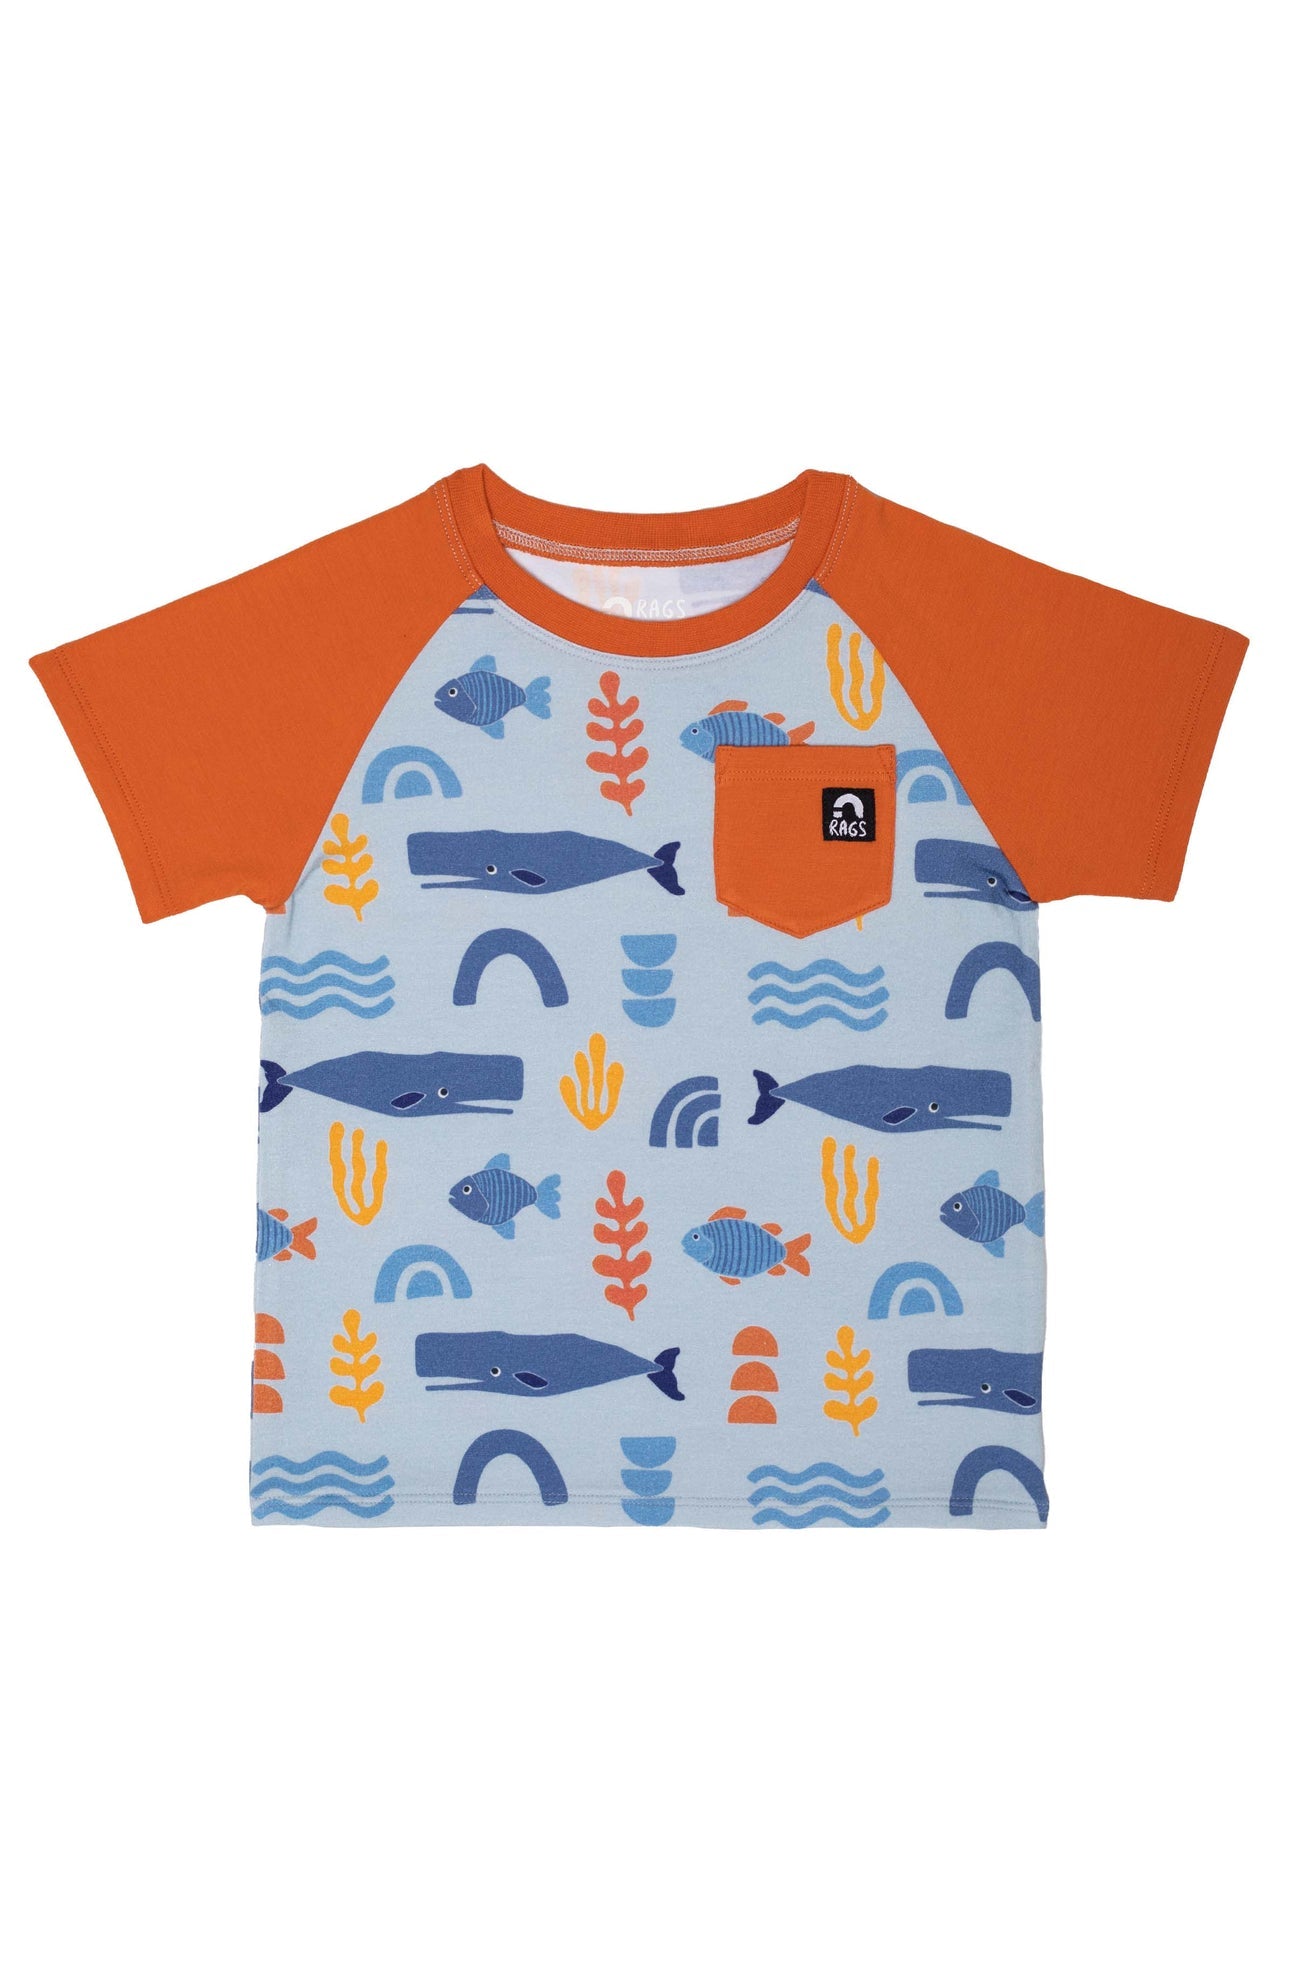 Short Raglan Sleeve Pocket Rounded Kids Tee - 'Abstract Ocean' TheT43Shop